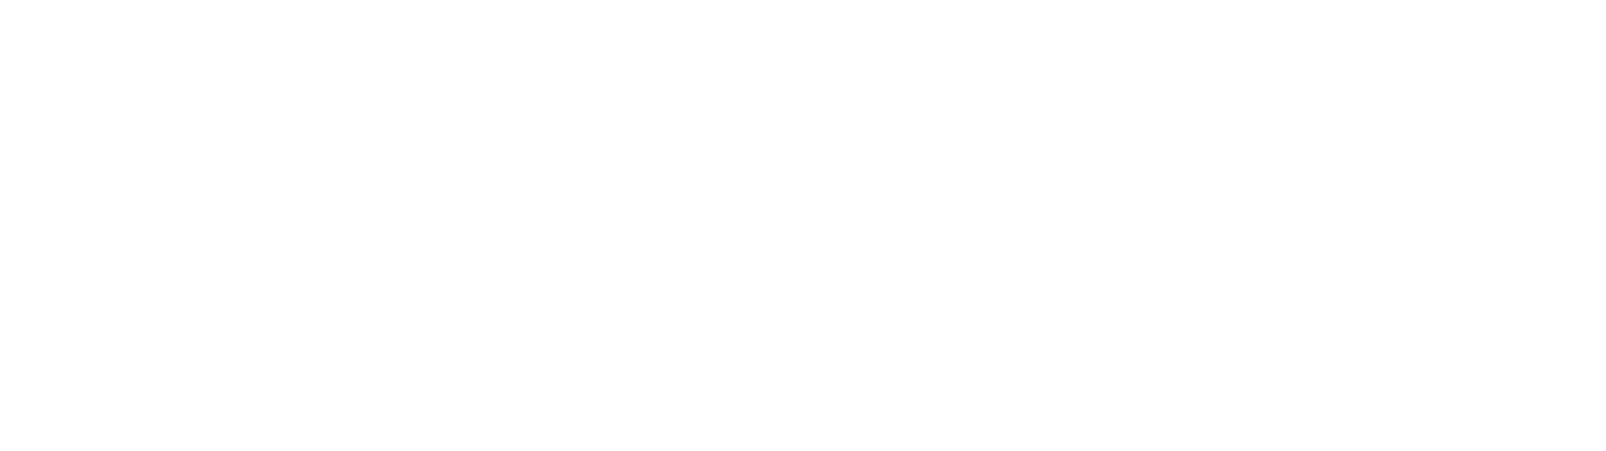 Glyphosate Test logo in all white - MosaicDX